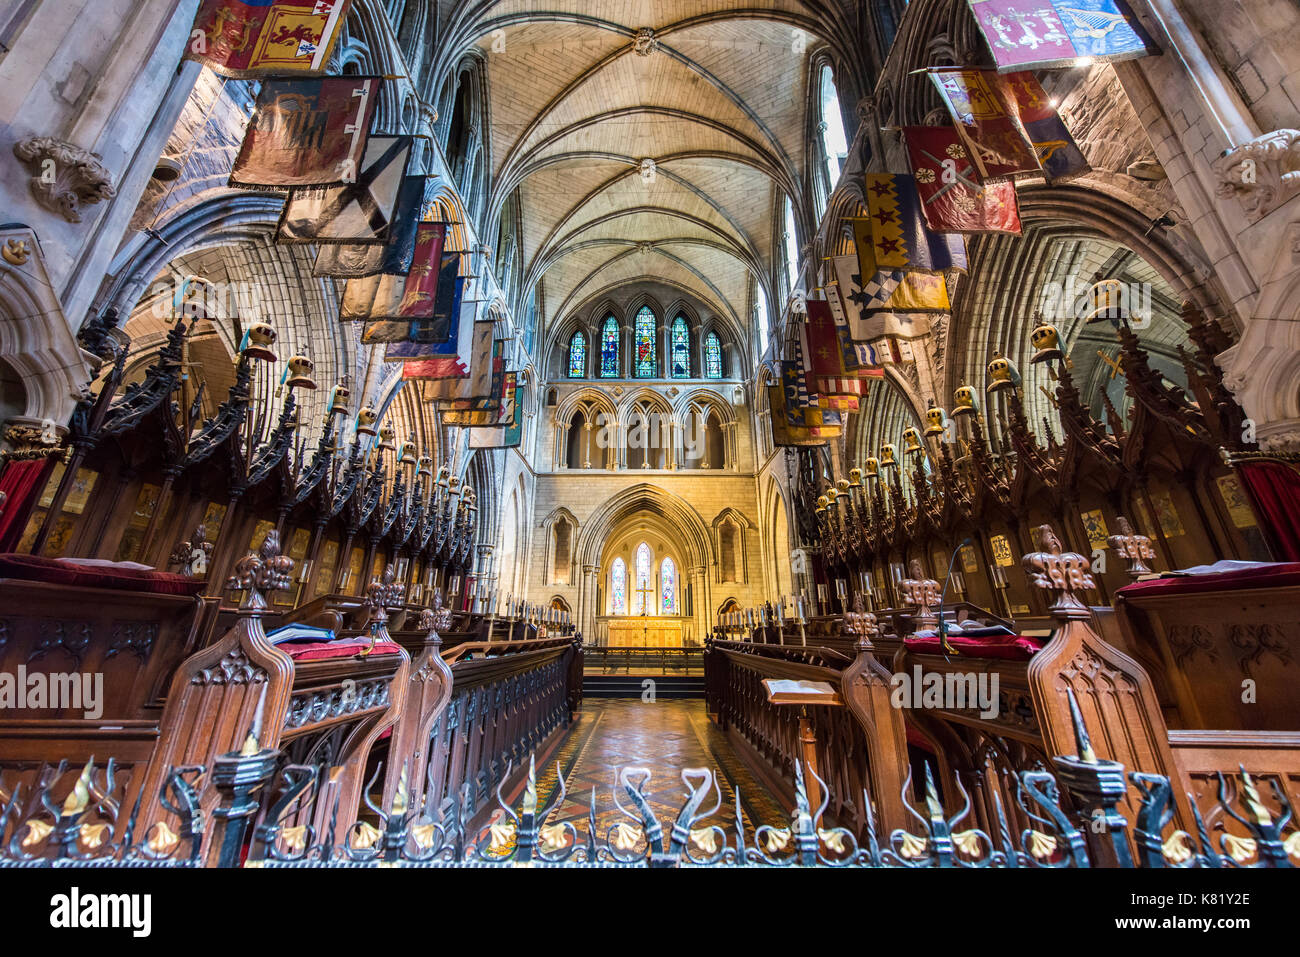 St. Patrick's Cathedral, interior, Dublin, Ireland Stock Photo